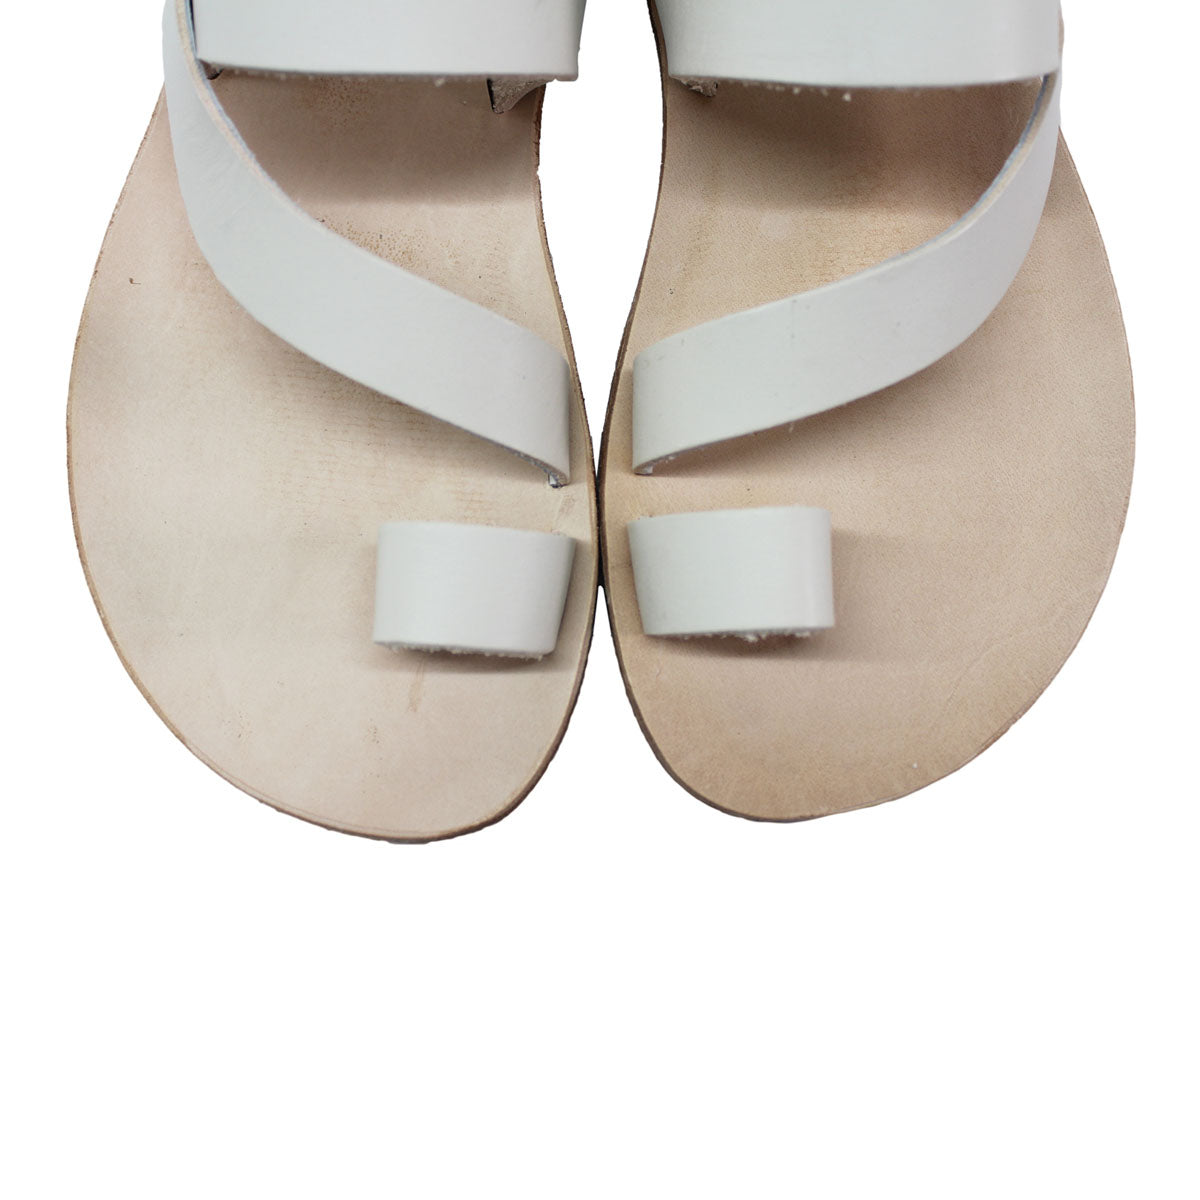 Vivobarefoot Womens Opanka 203225 Leather Sandals - UK 5